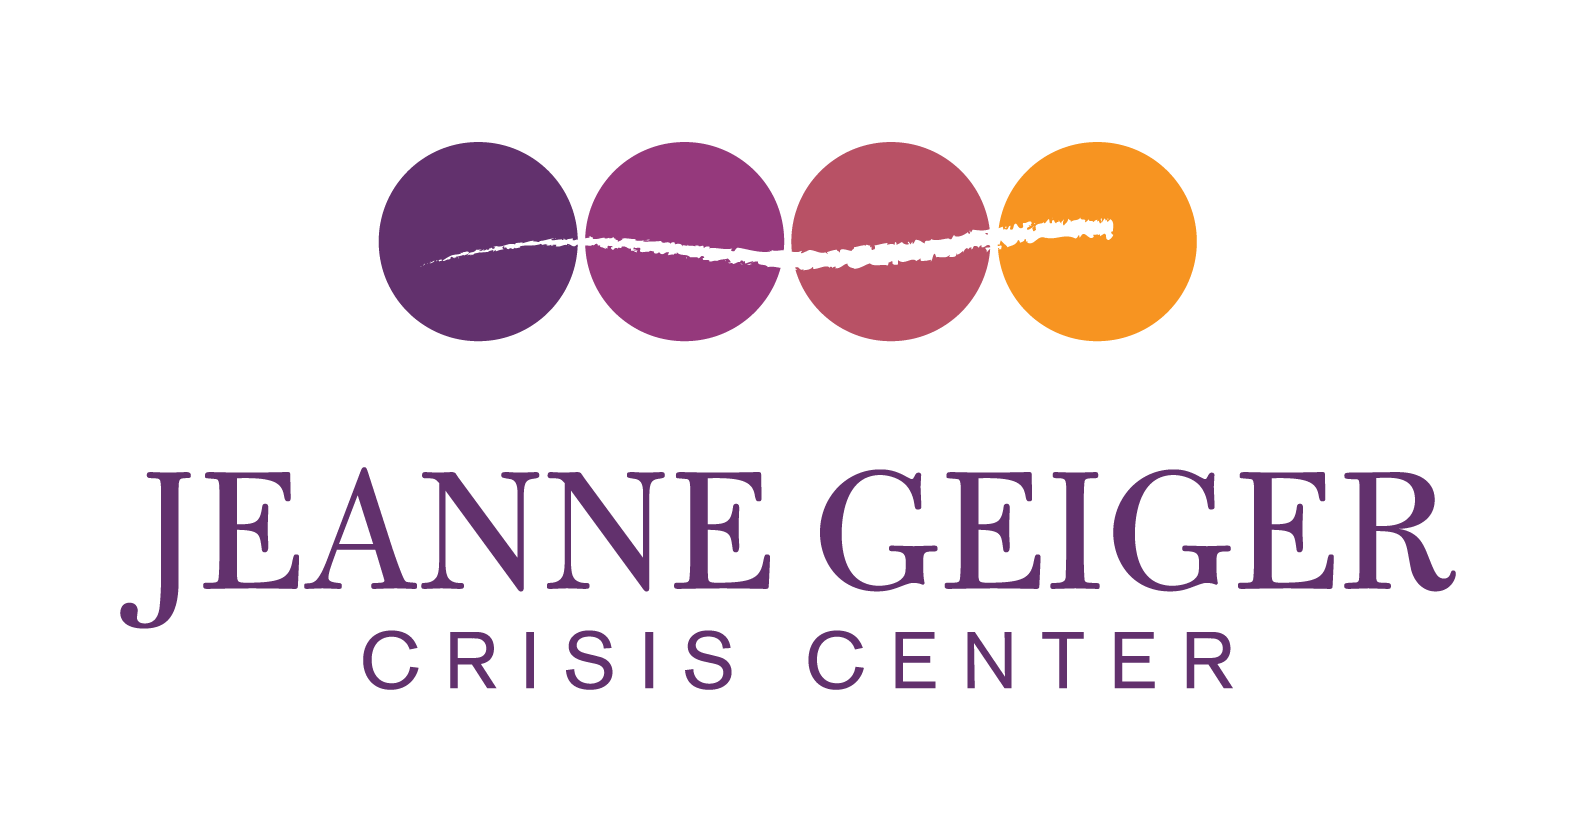 Jeanne Geiger Crisis Center